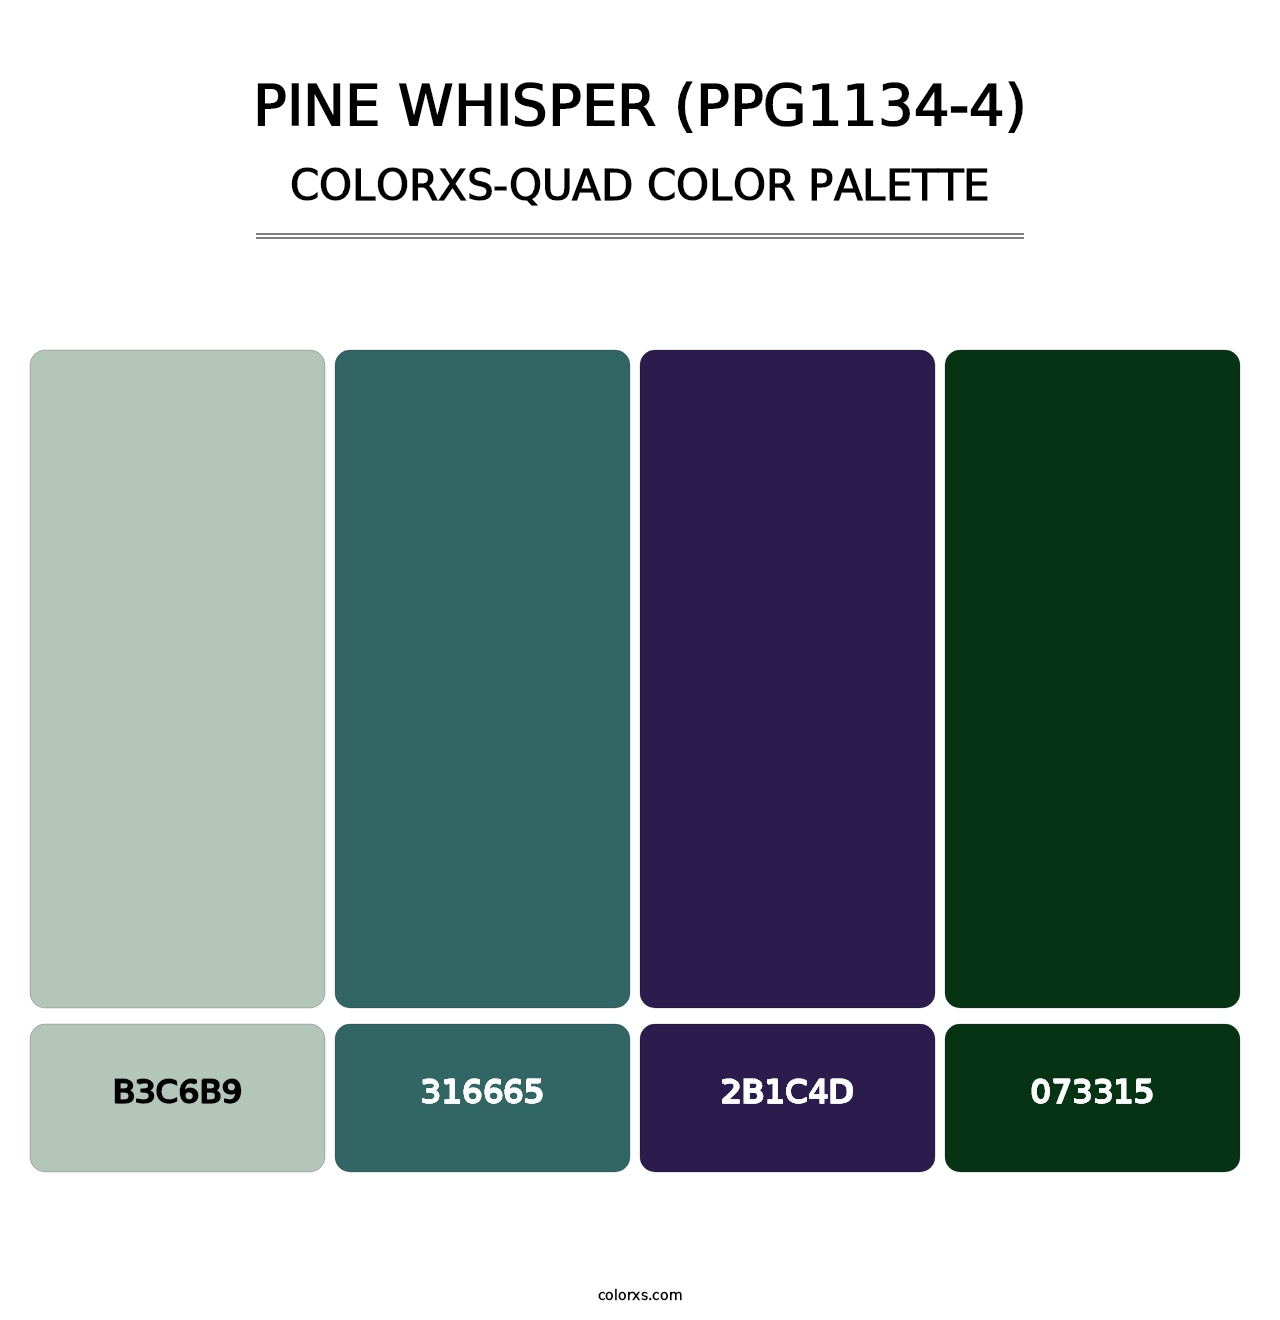 Pine Whisper (PPG1134-4) - Colorxs Quad Palette